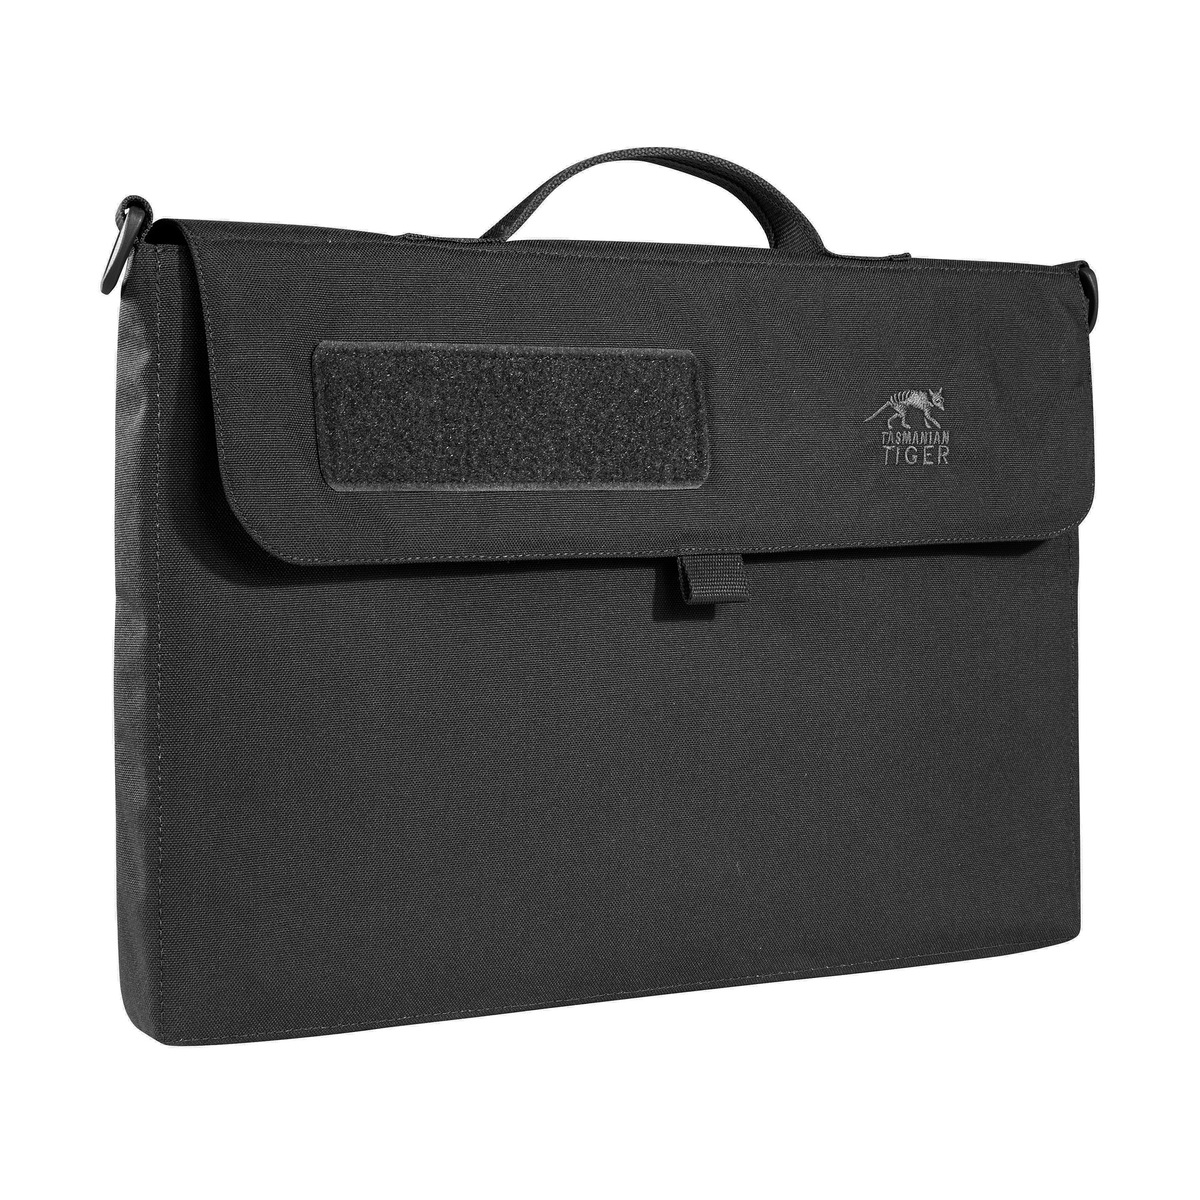 Modular Laptop Case Black, One Size